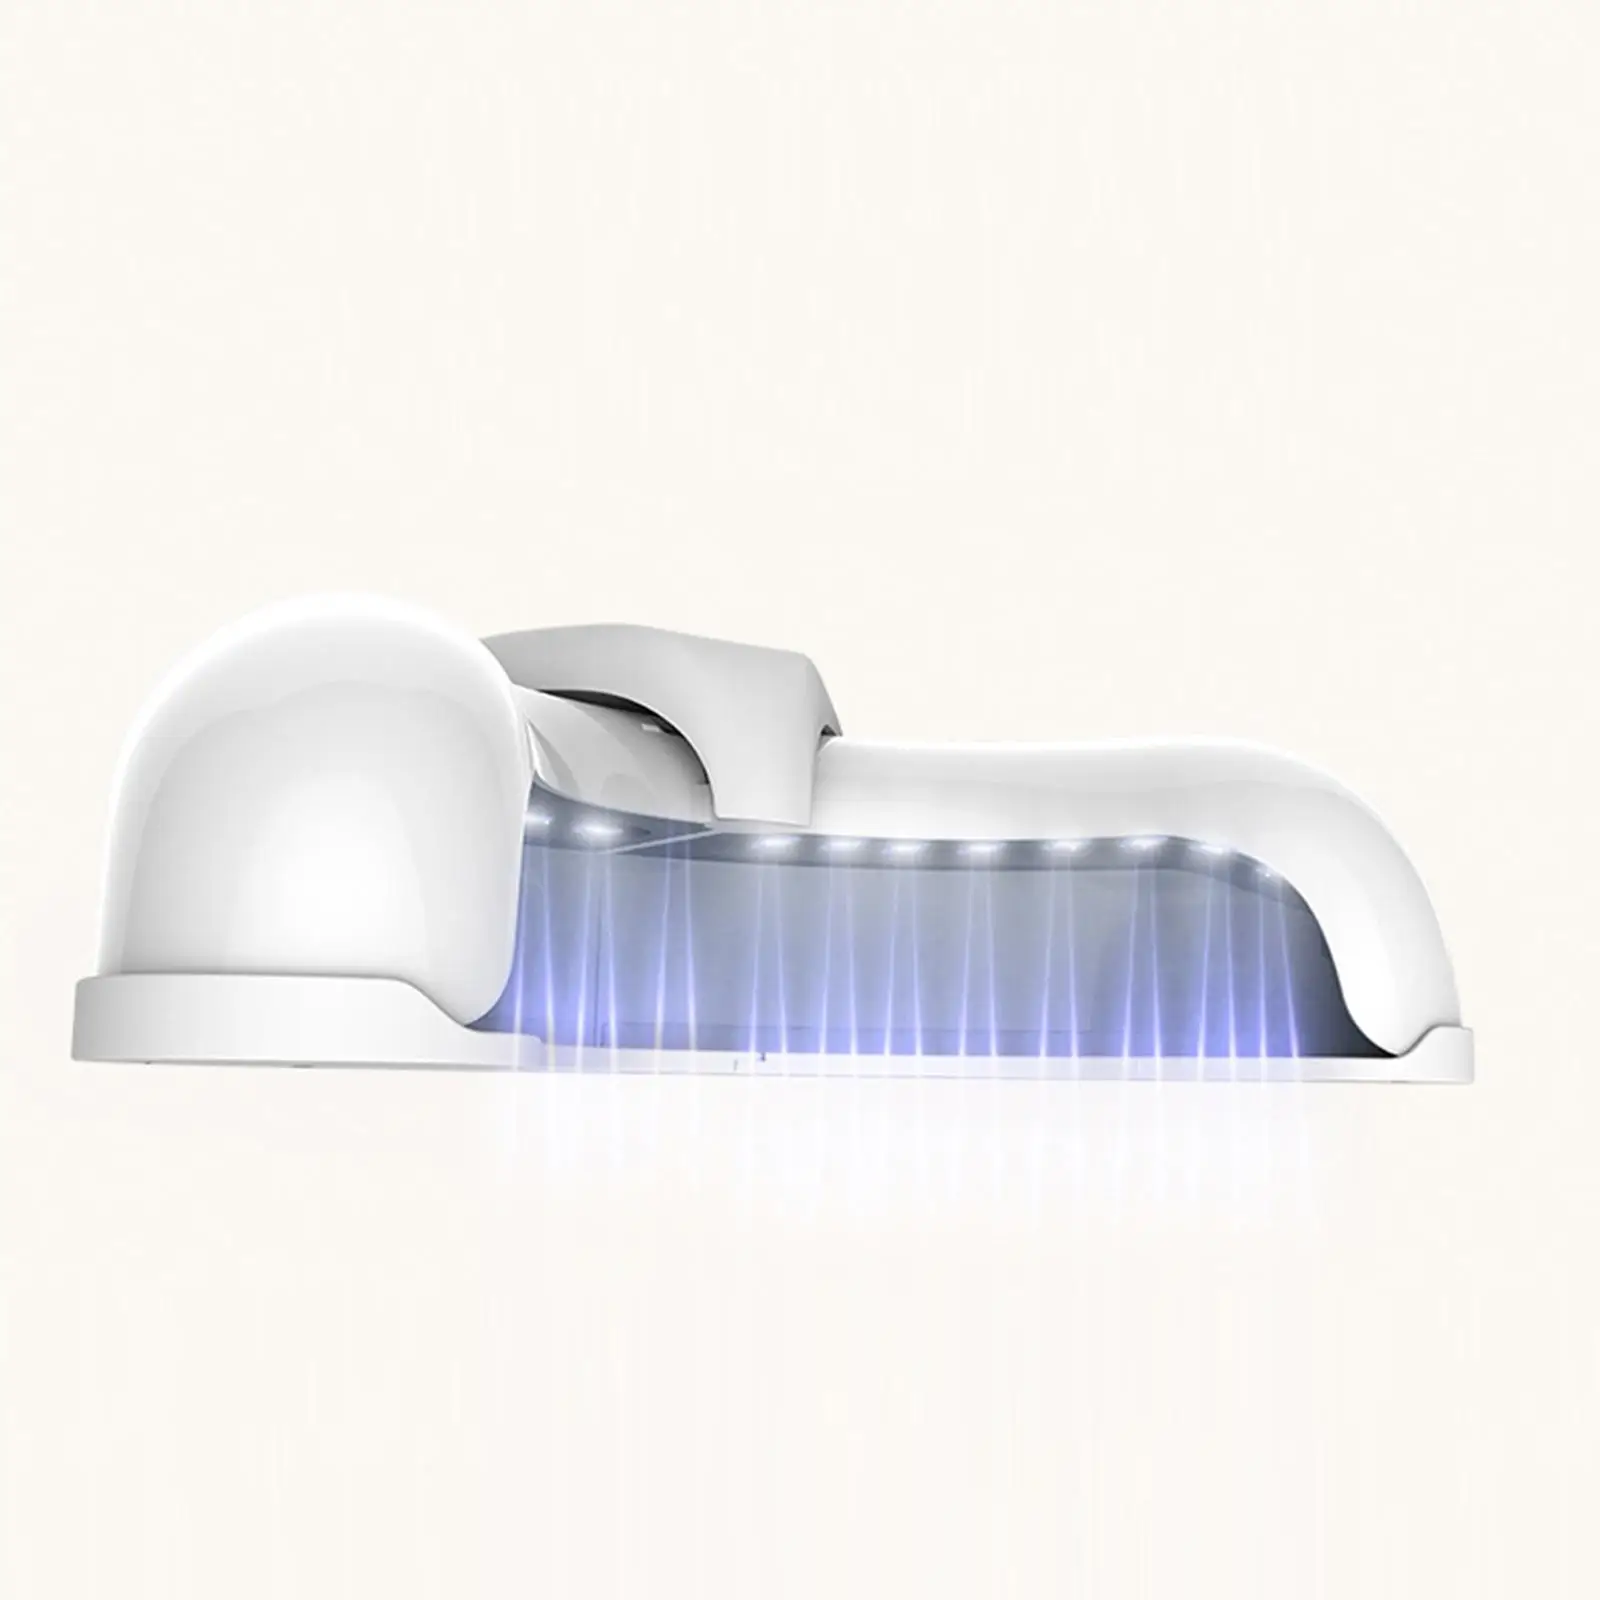 UV Nail Dryer Lamp 18 UV LED Light Smart Screen Nail Polish Curing Lamp for All Gels Girl